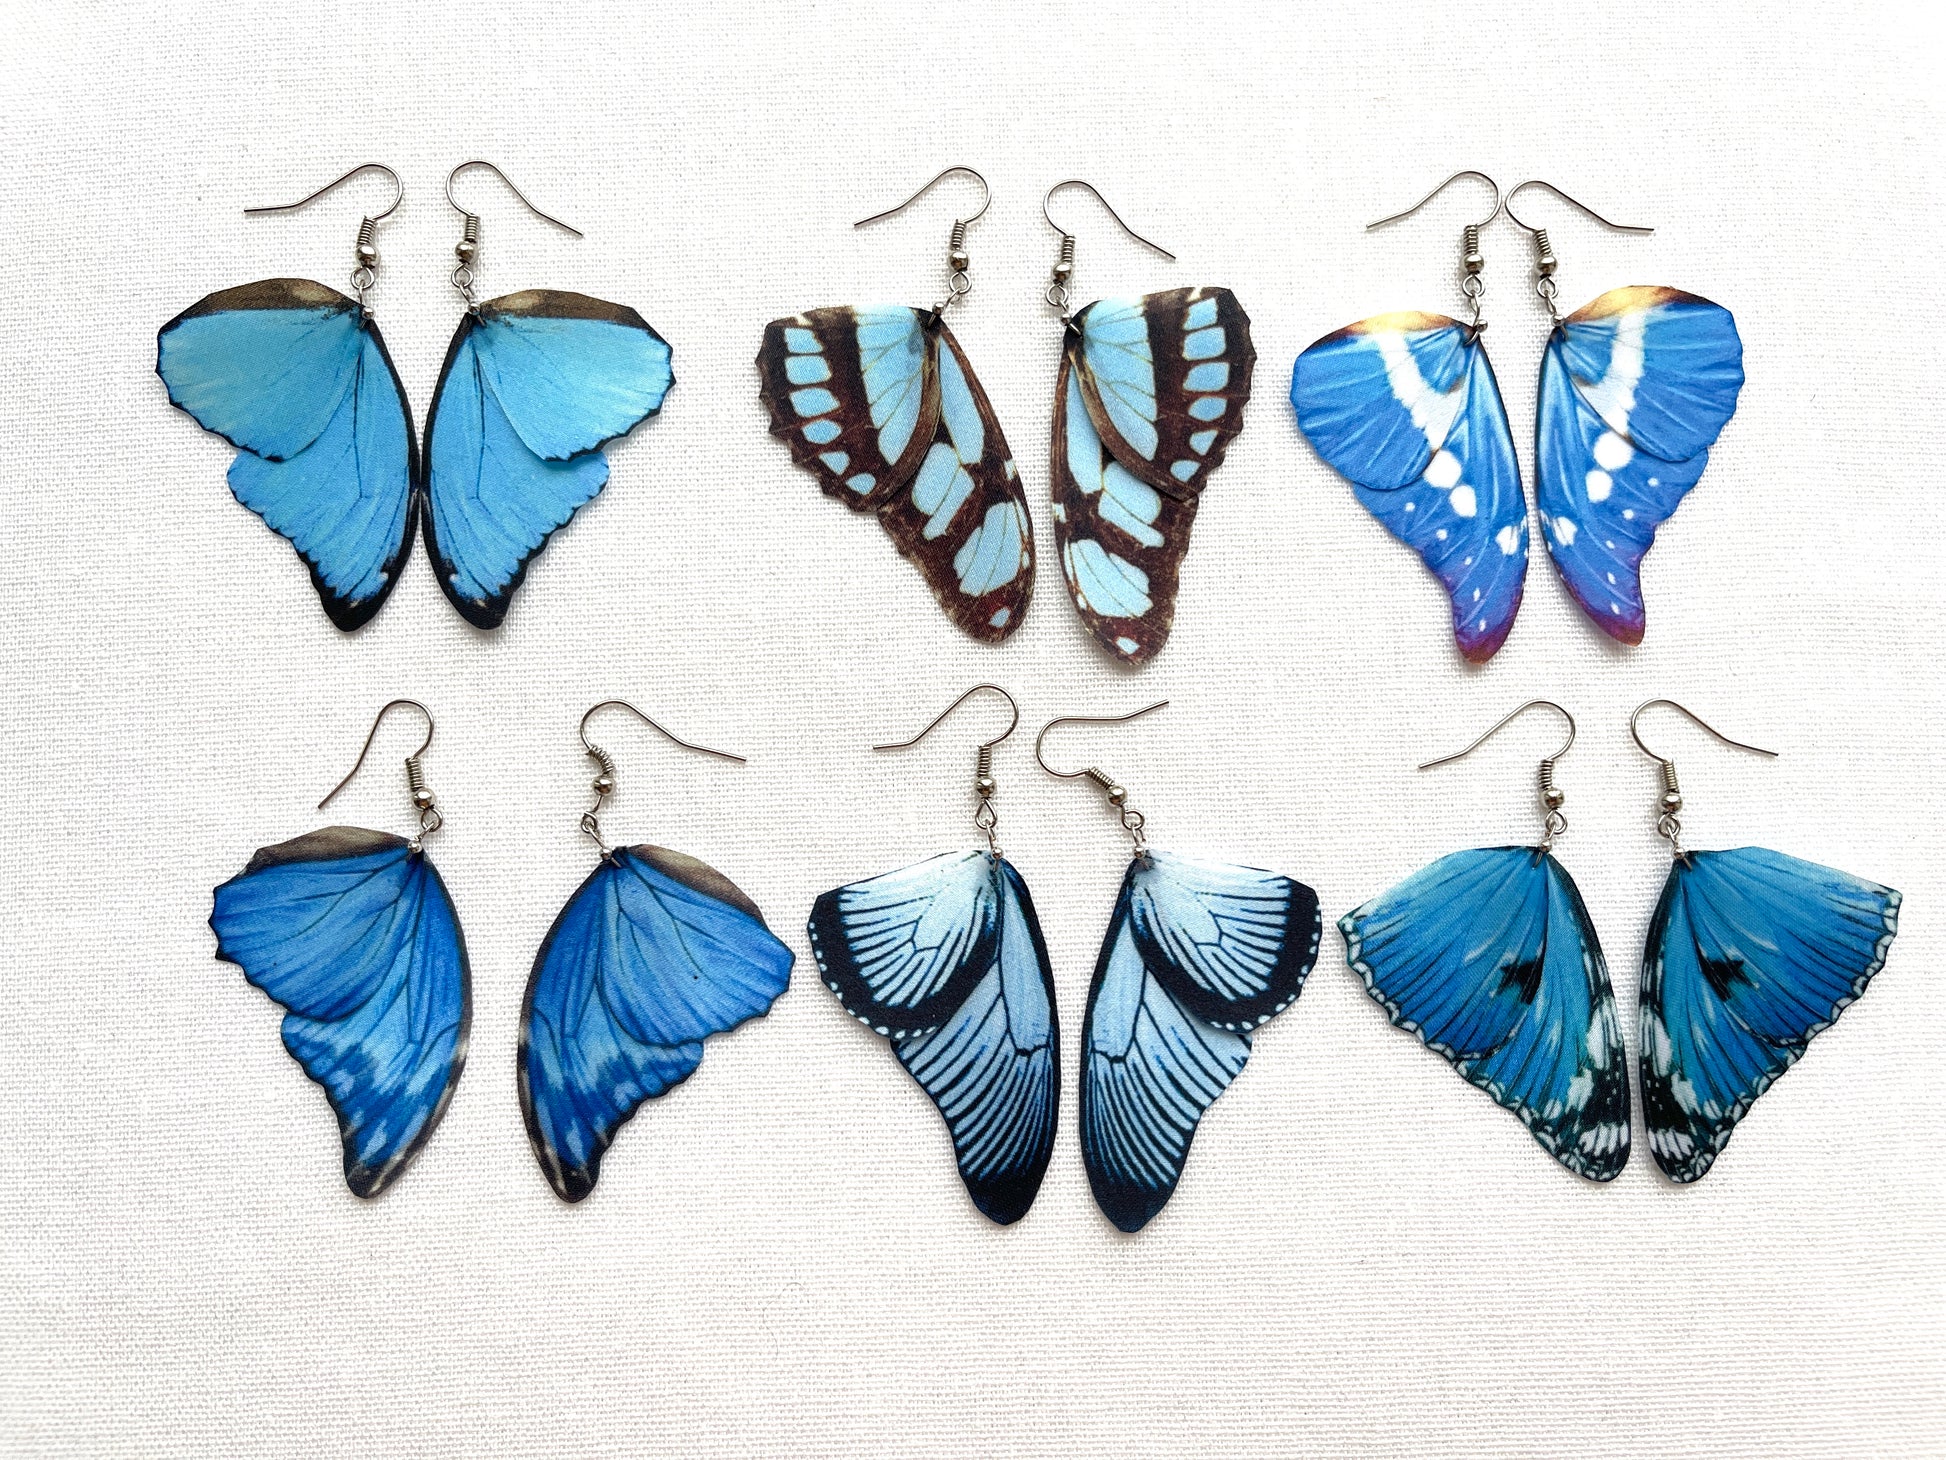 Blue butterfly wing earrings in different designs